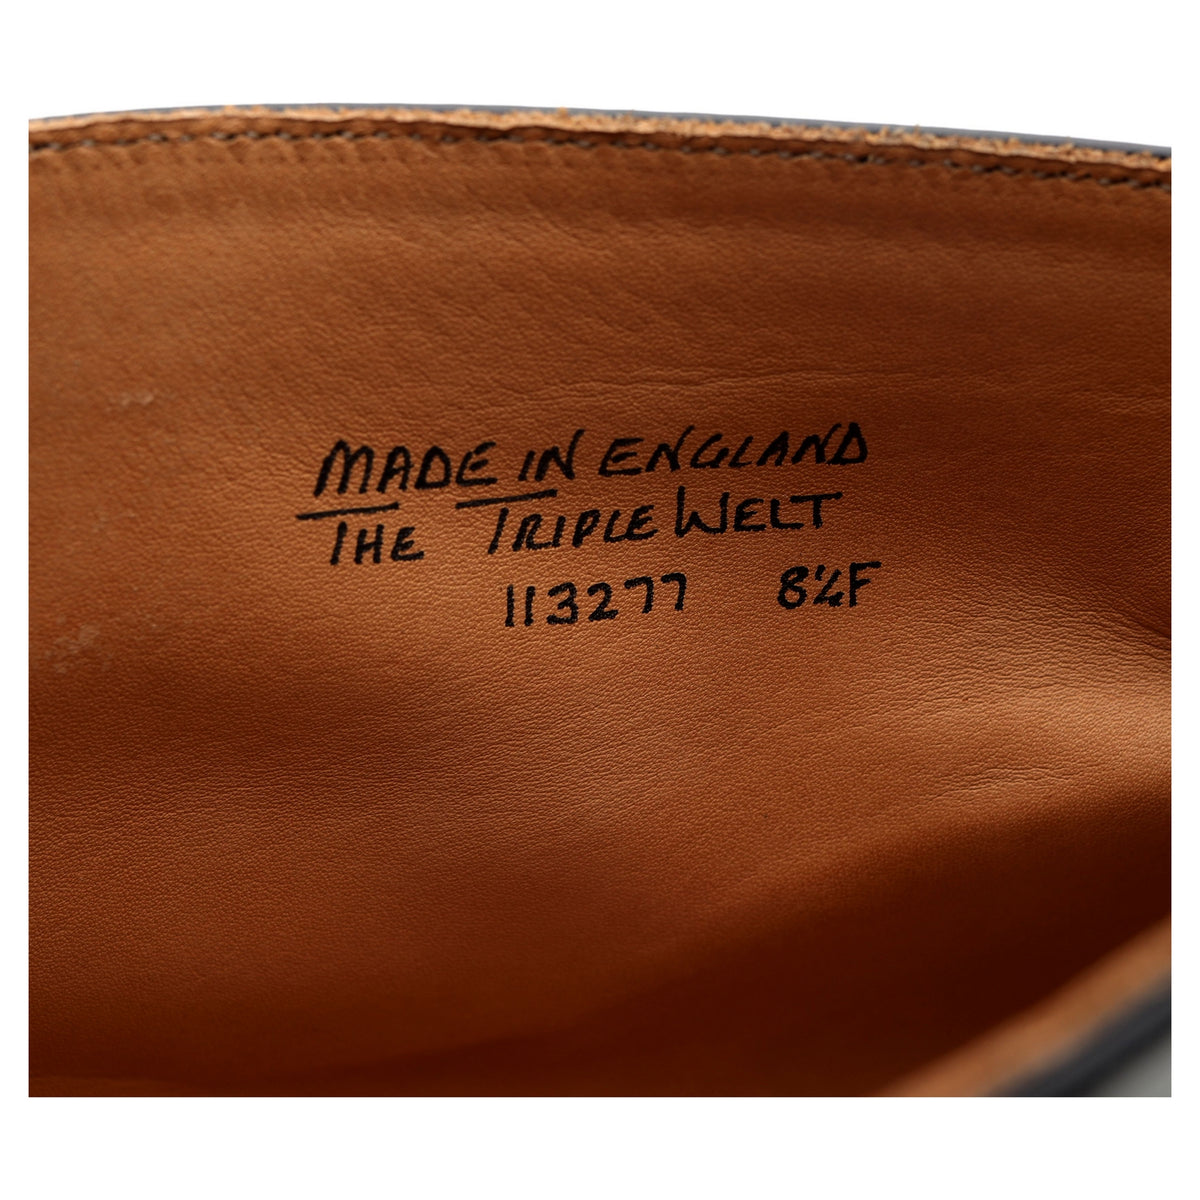 Triple Welt Black Leather Chukka Boots UK 8.5 F